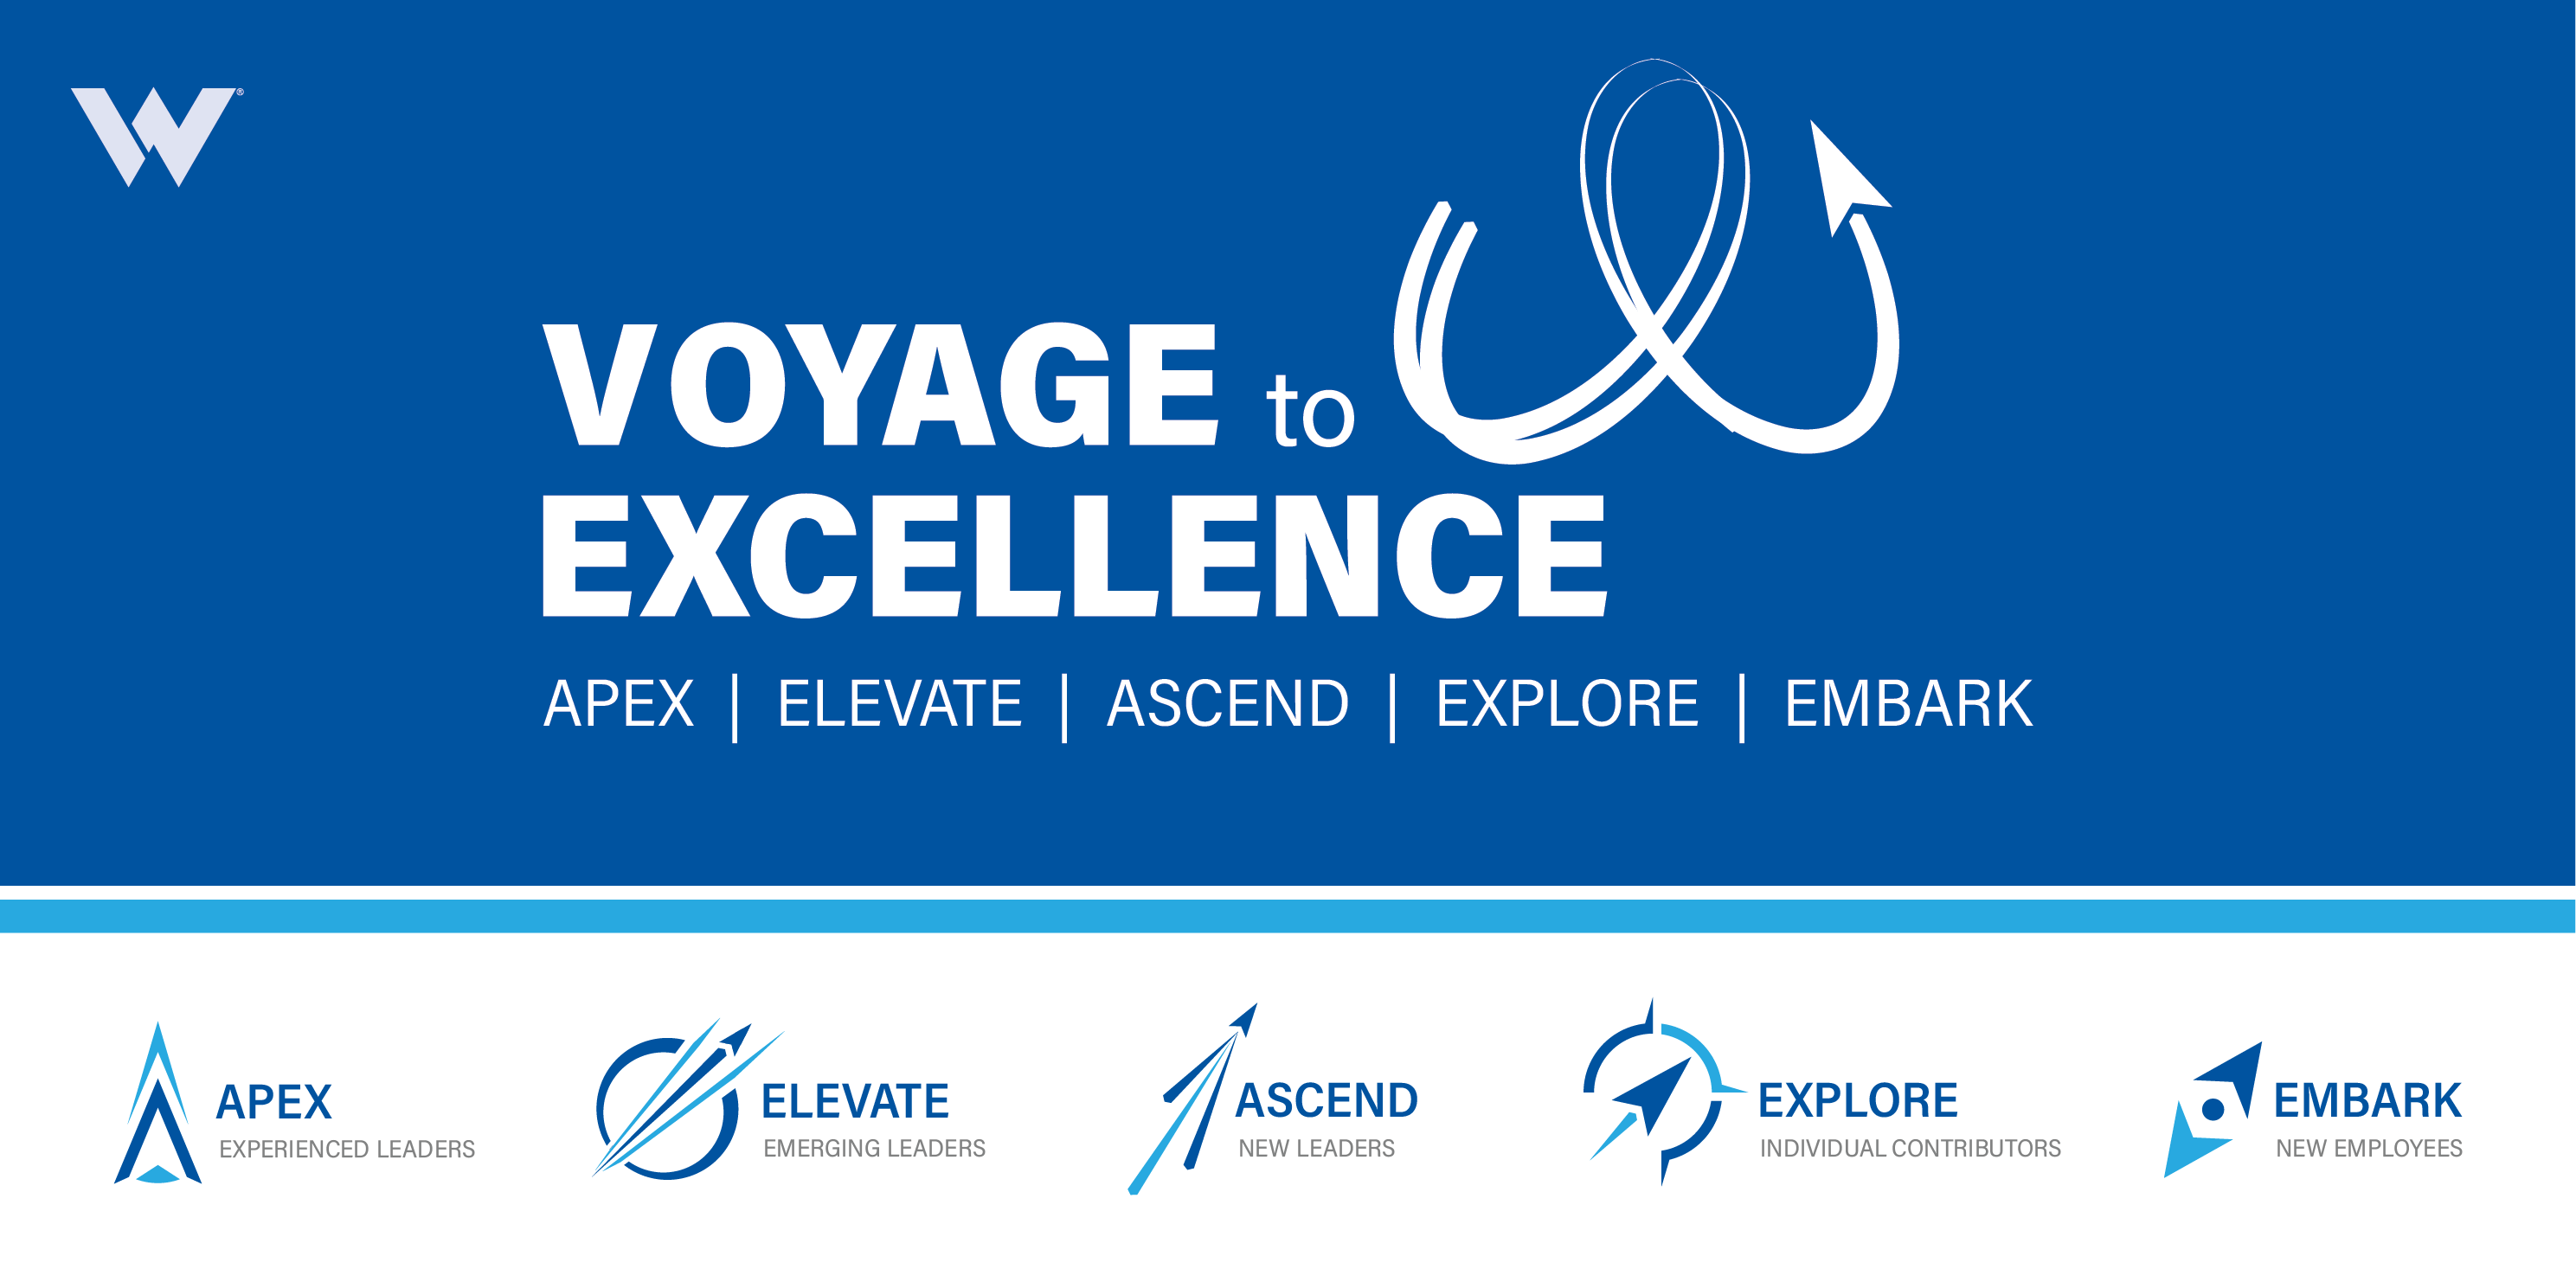 The Voygage to Excellence program logos.